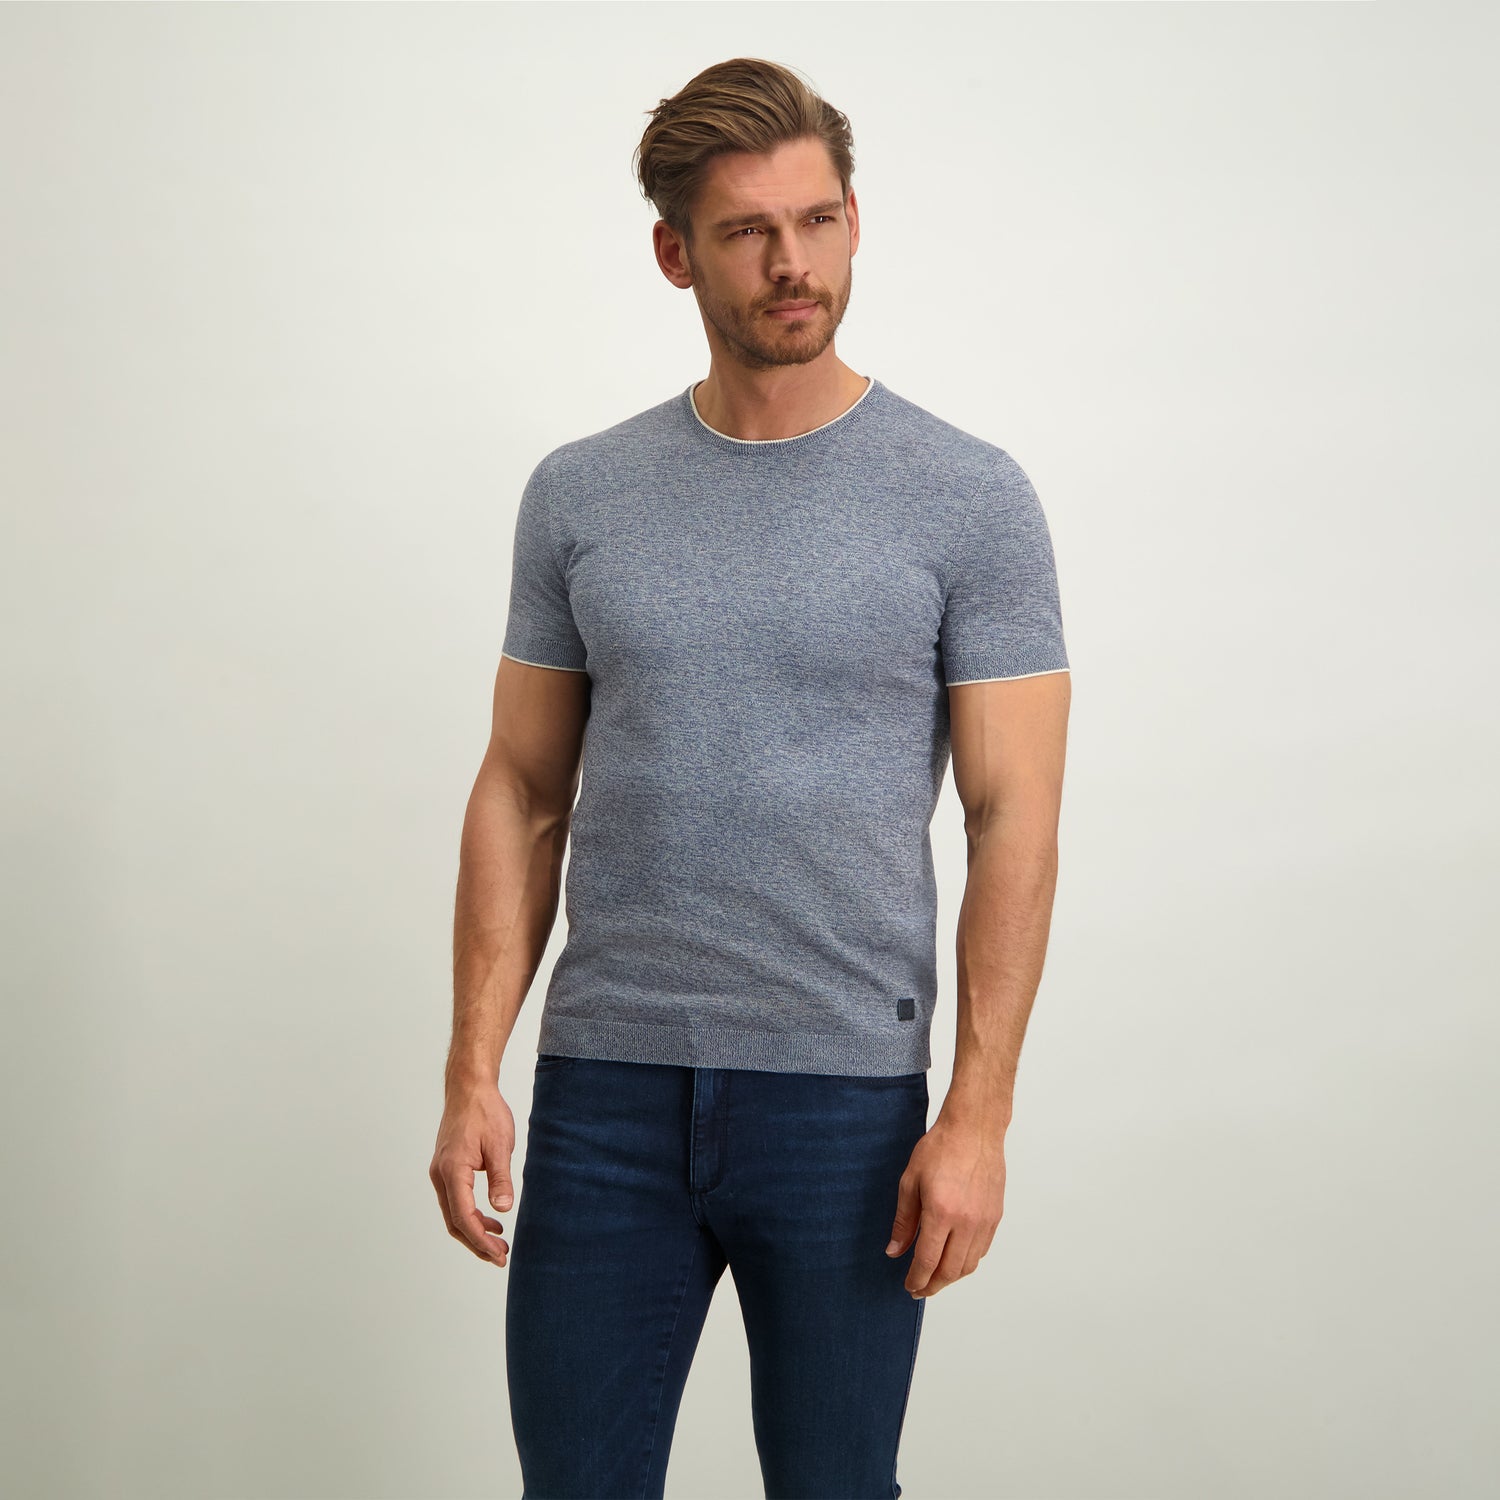 T-shirt structuurgebreid - donkerblauw/middenblauw